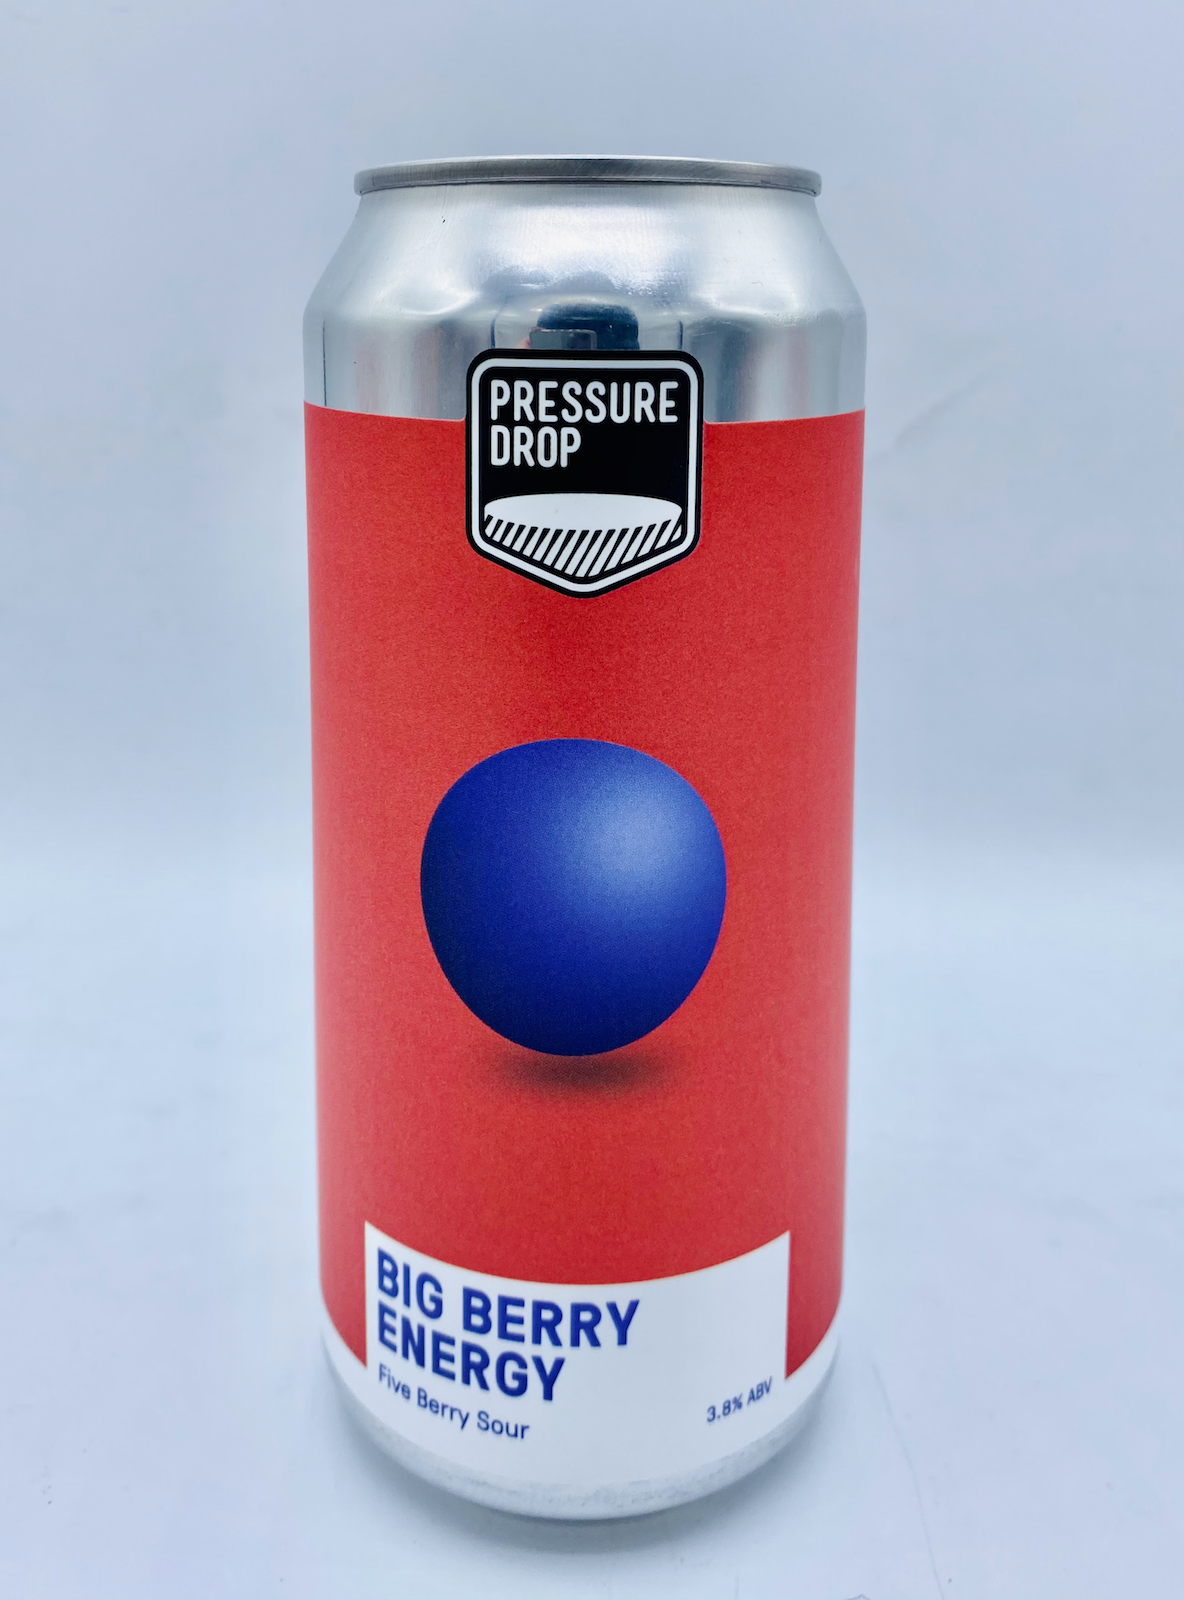 Pressure drop - Big Berry Energy 3.8%